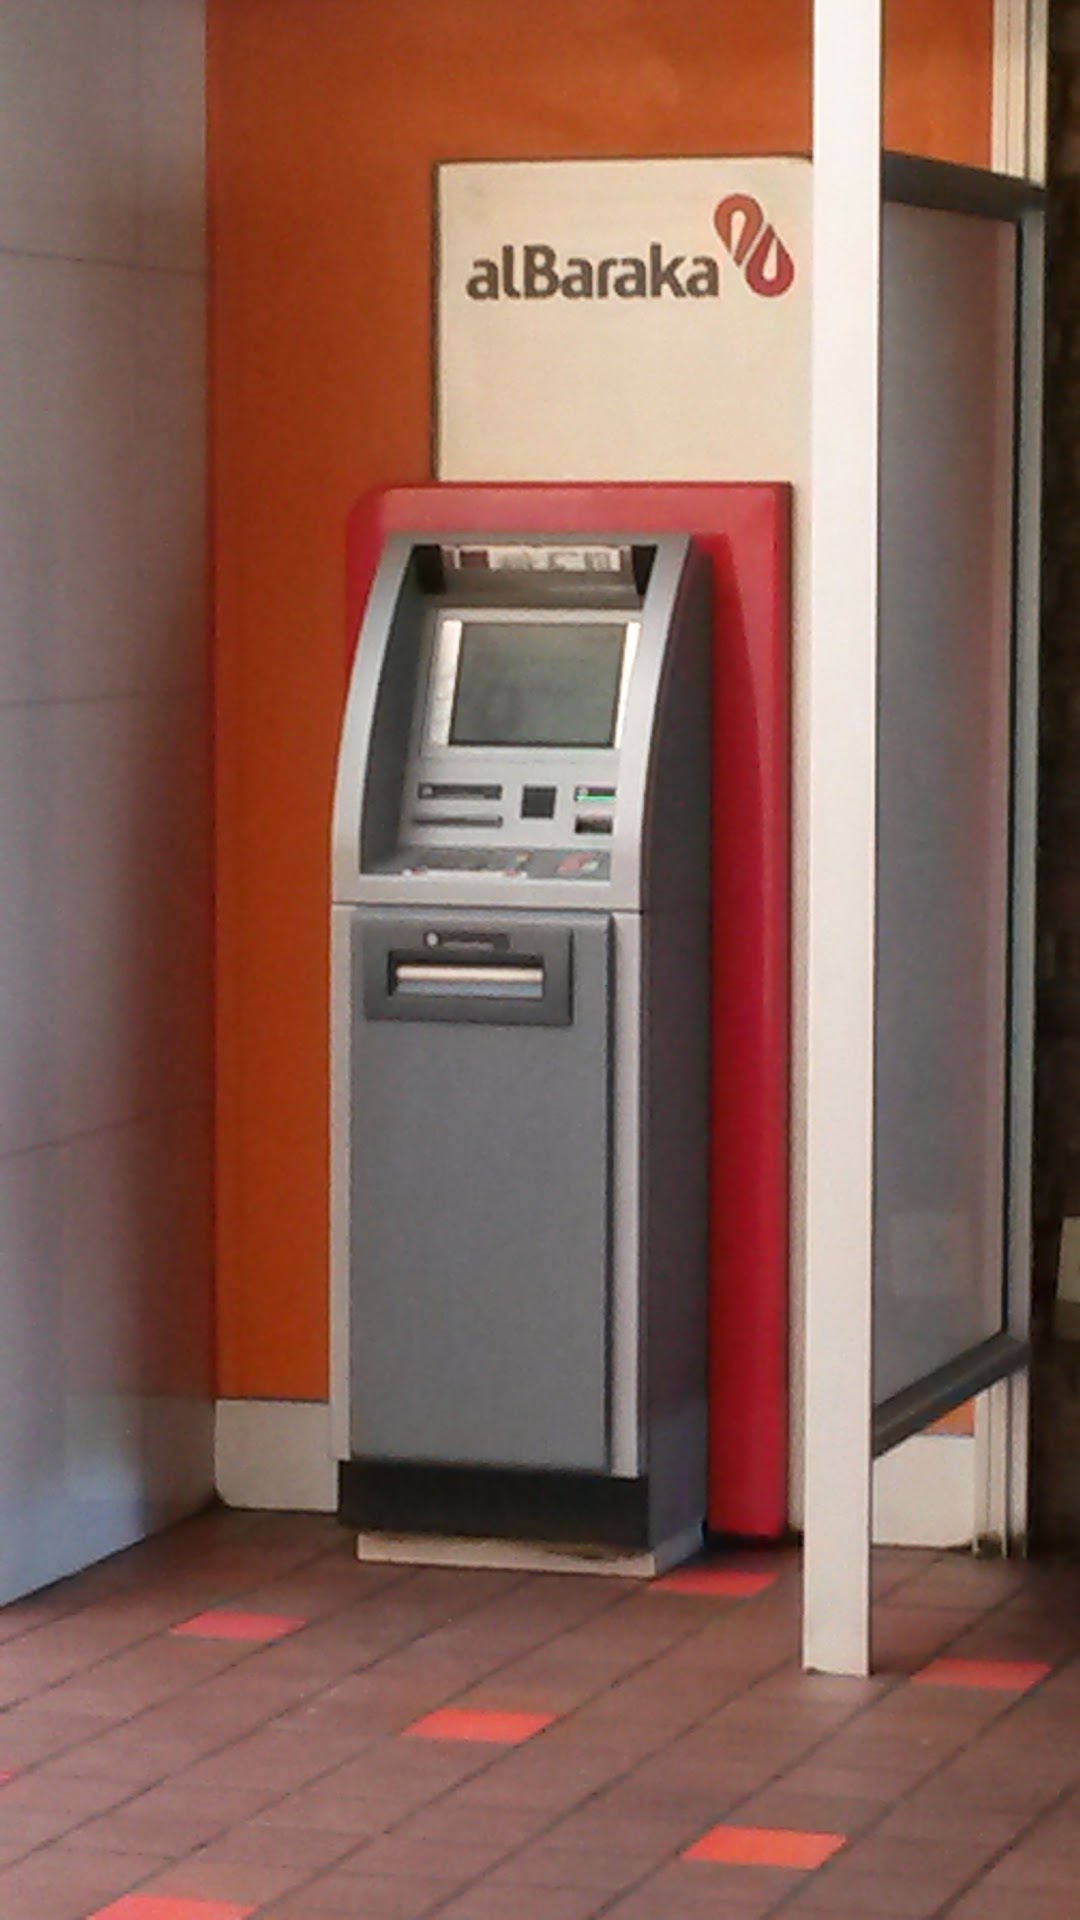 alBaraka ATM